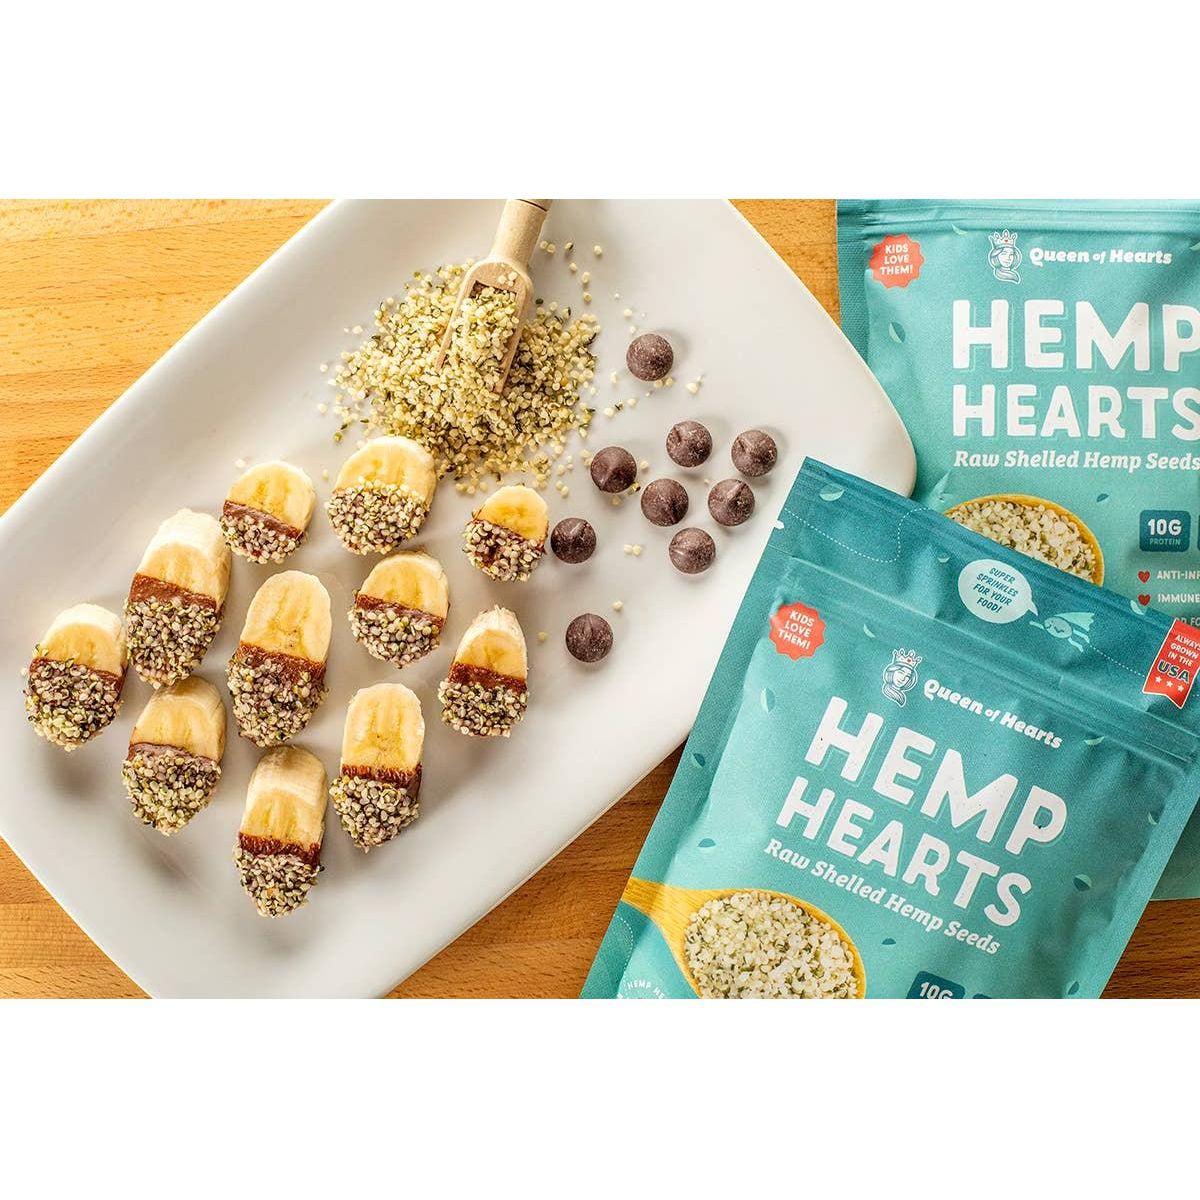 Queen of Hearts 12 oz Hemp Hearts - Raw Shelled Hemp Seeds